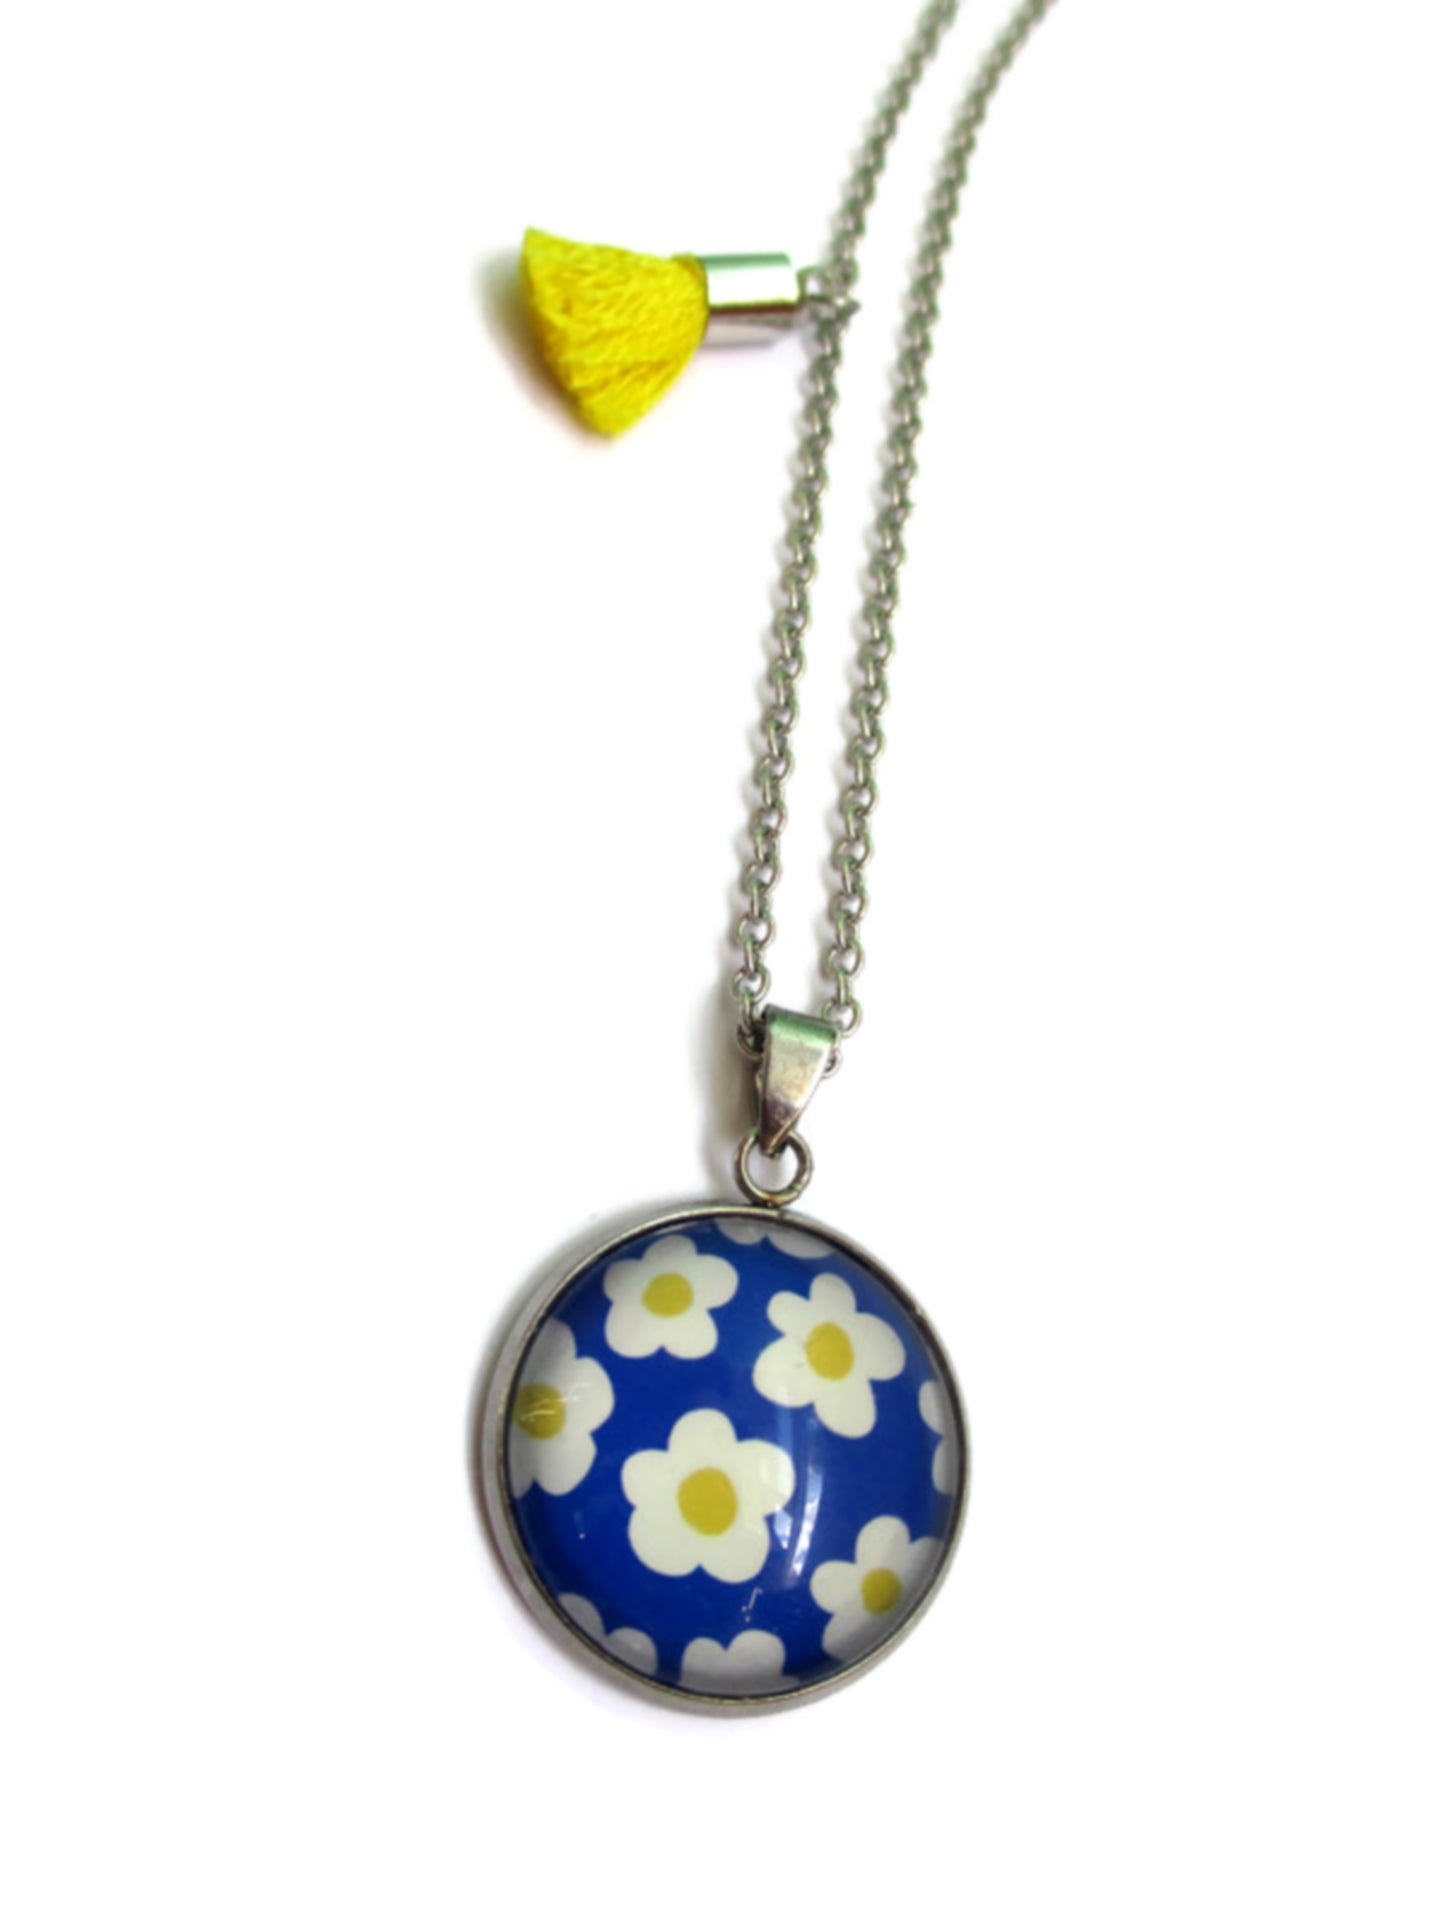 Little blue Flower necklace